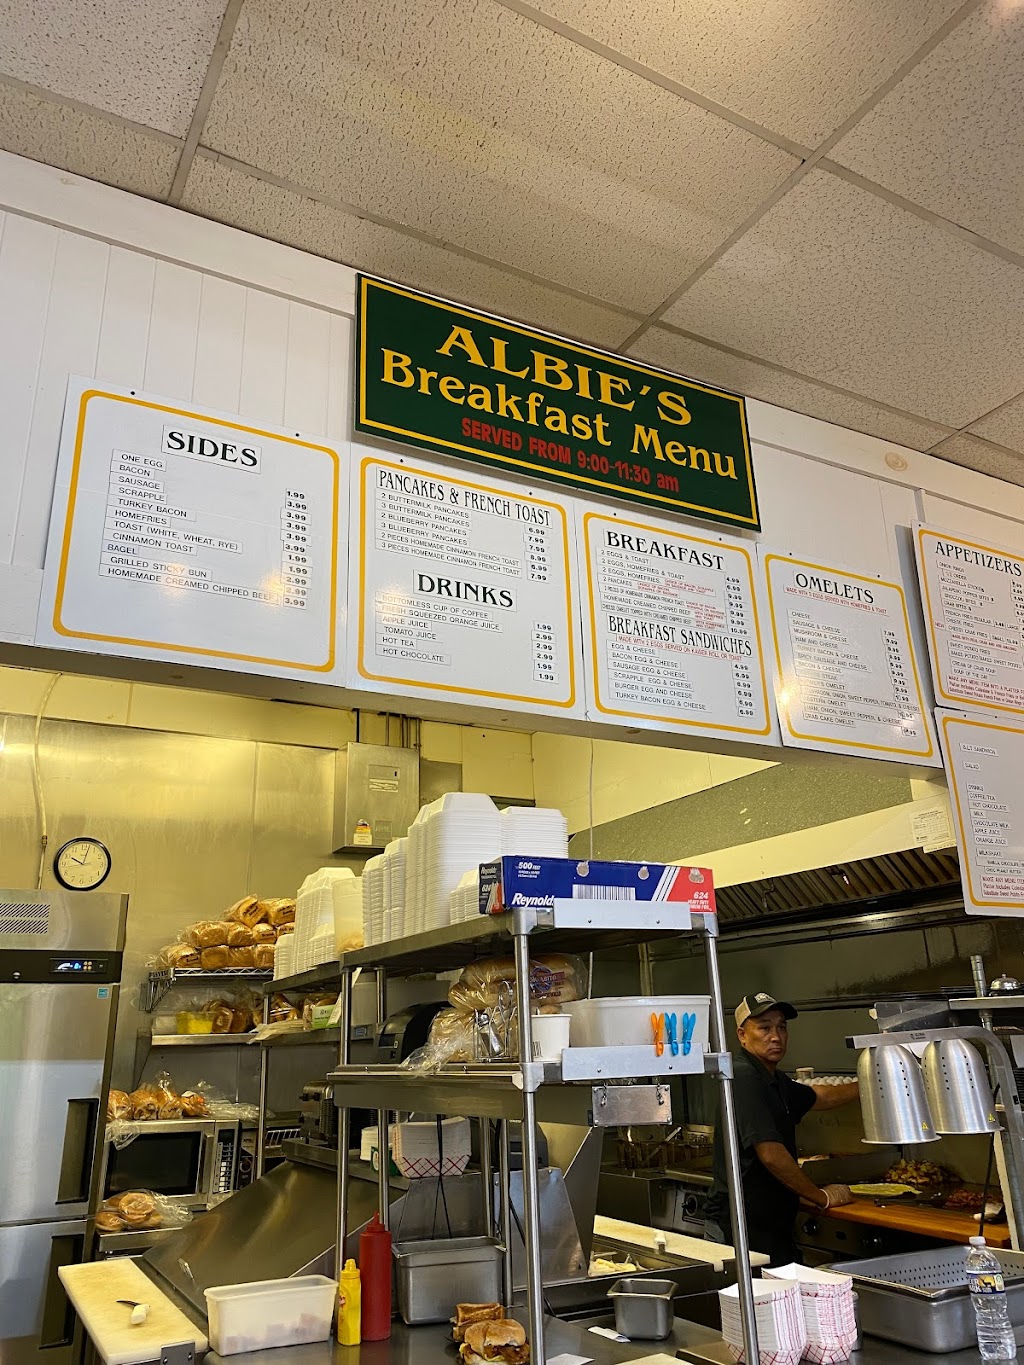 Albie’s Burgers Restaurant and Food Truck | 1362 Naamans Creek Rd #1, Garnet Valley, PA 19060 | Phone: (610) 485-5539